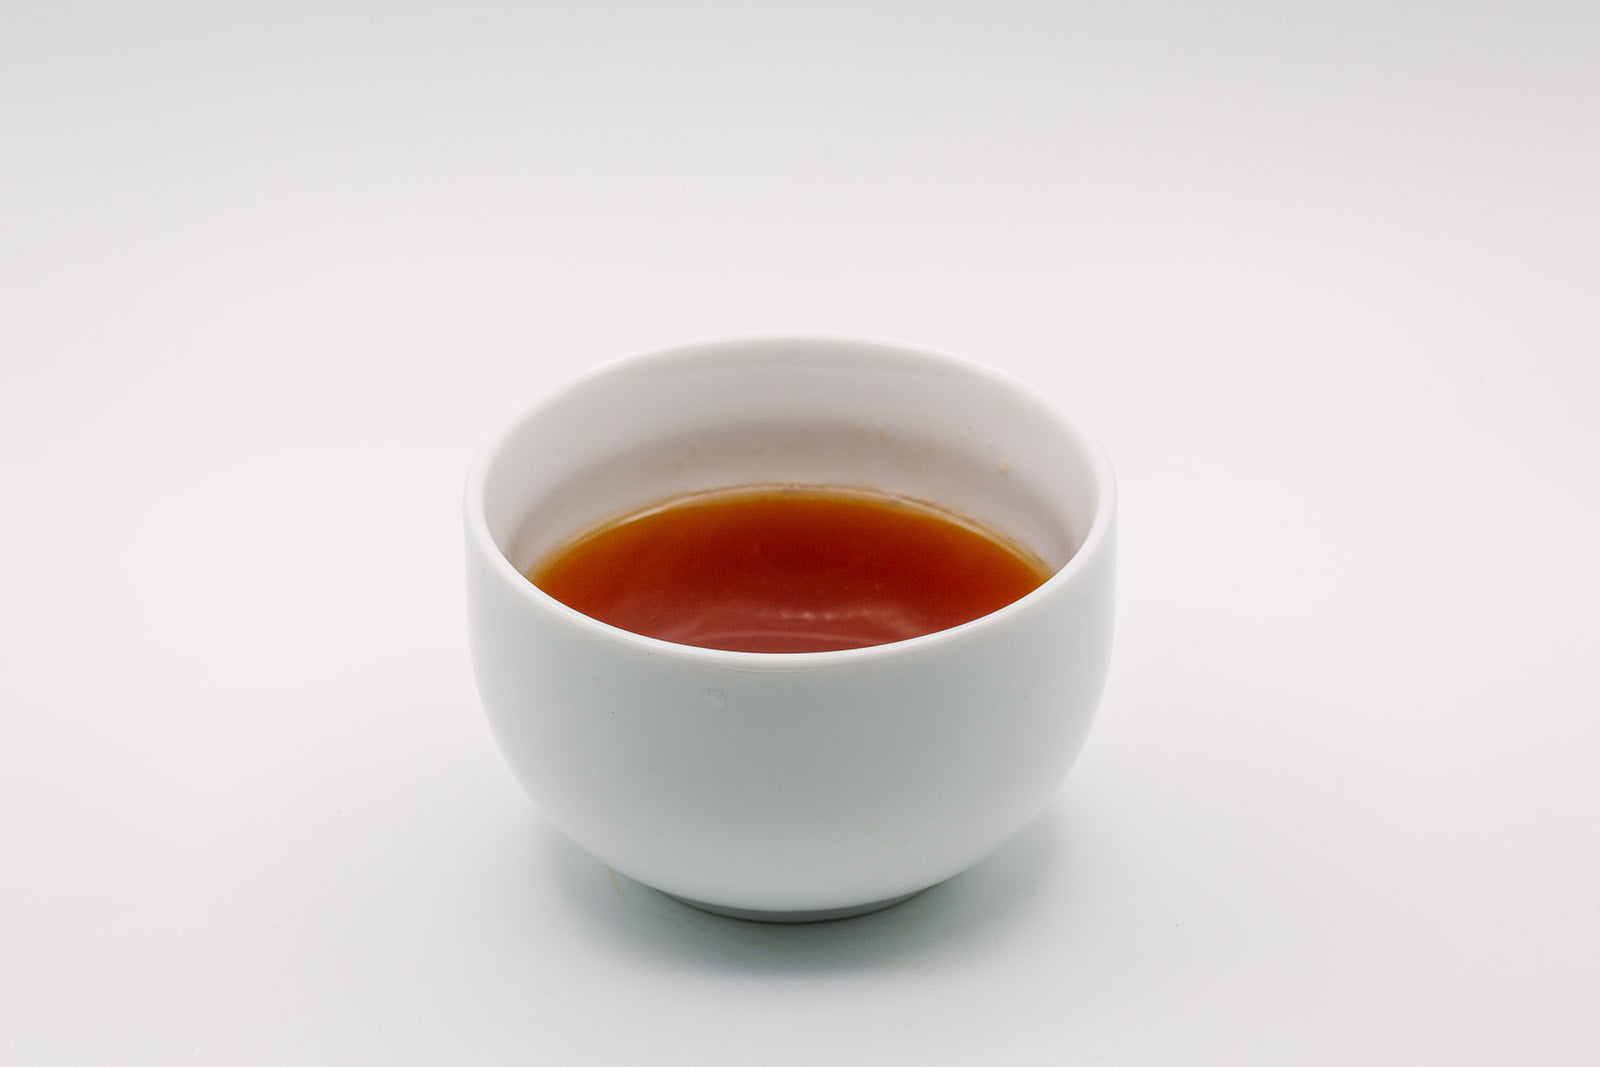 Golden Yunnan Supreme Black Tea